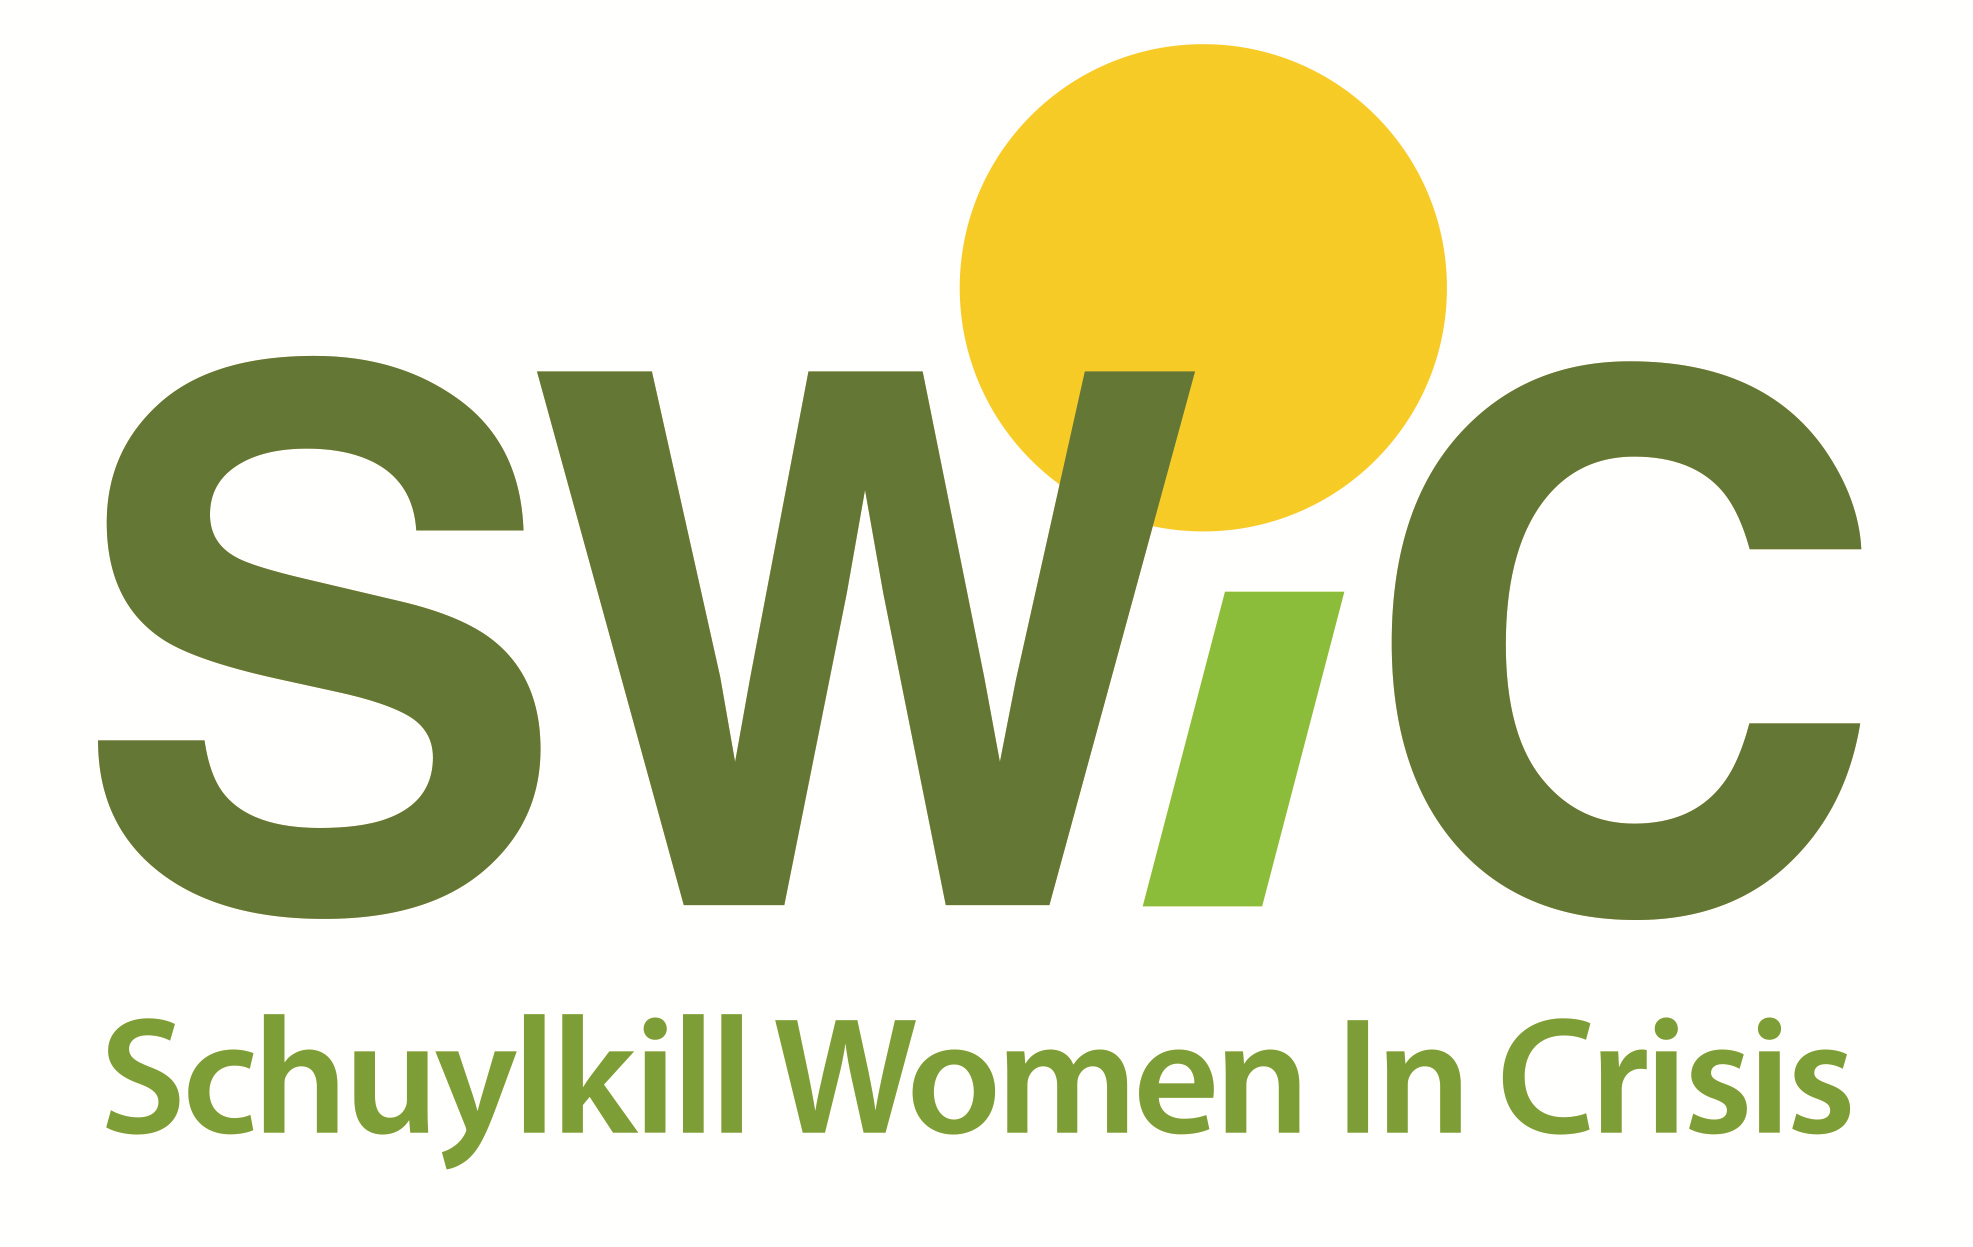 Schuylkill Women in Crisis logo